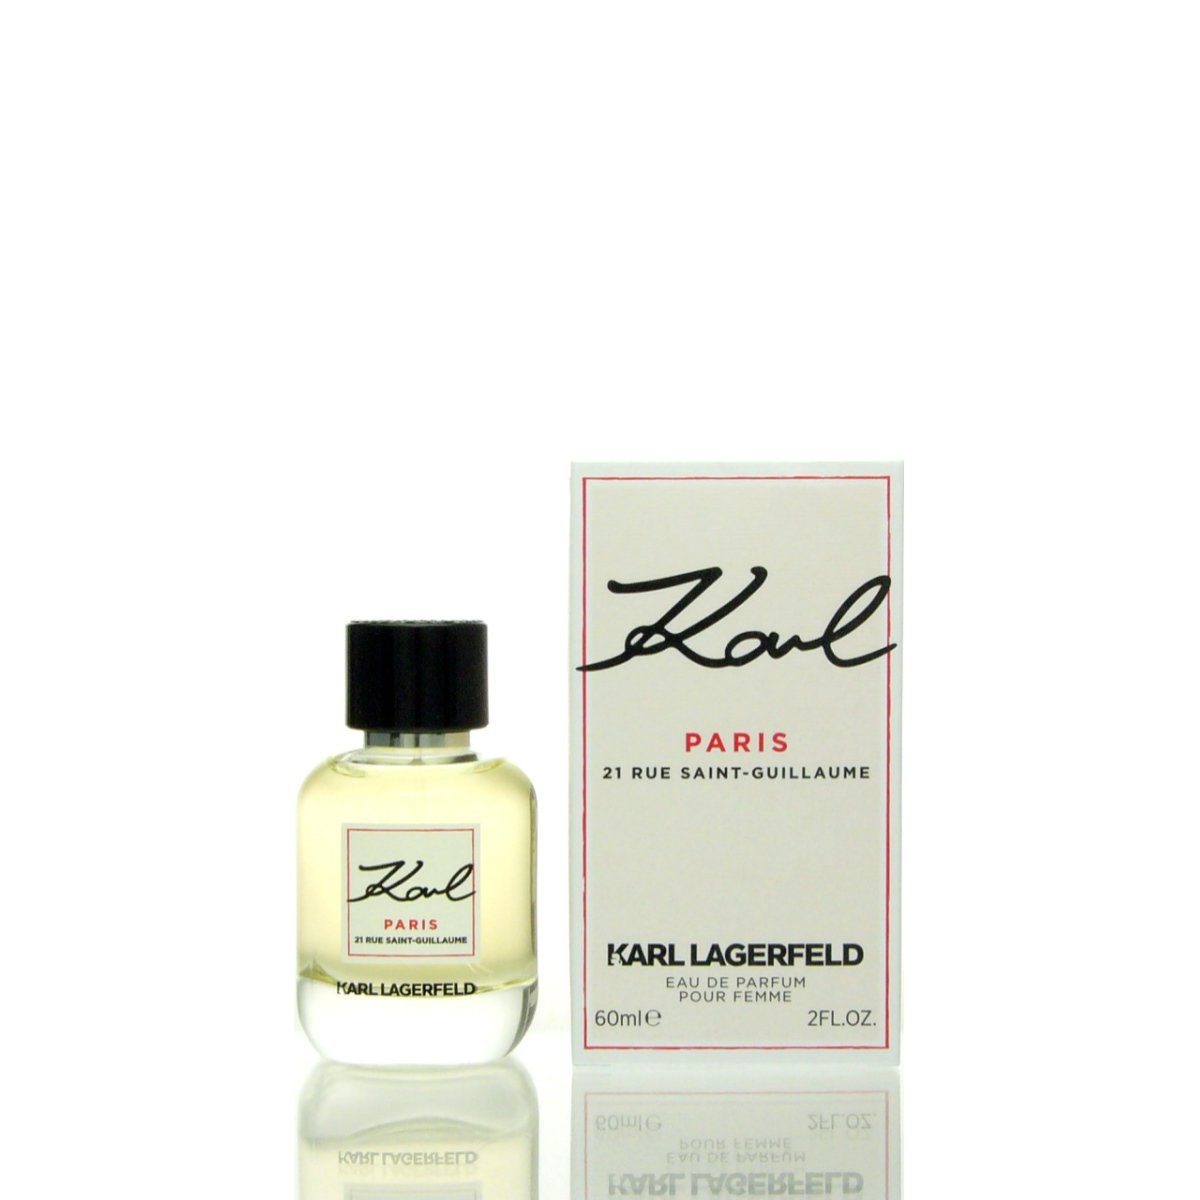 Lagerfeld Karl Paris Parfum 60 Parfum Saint-Guillaume ml Karl de KARL LAGERFELD Rue Eau de Eau 21